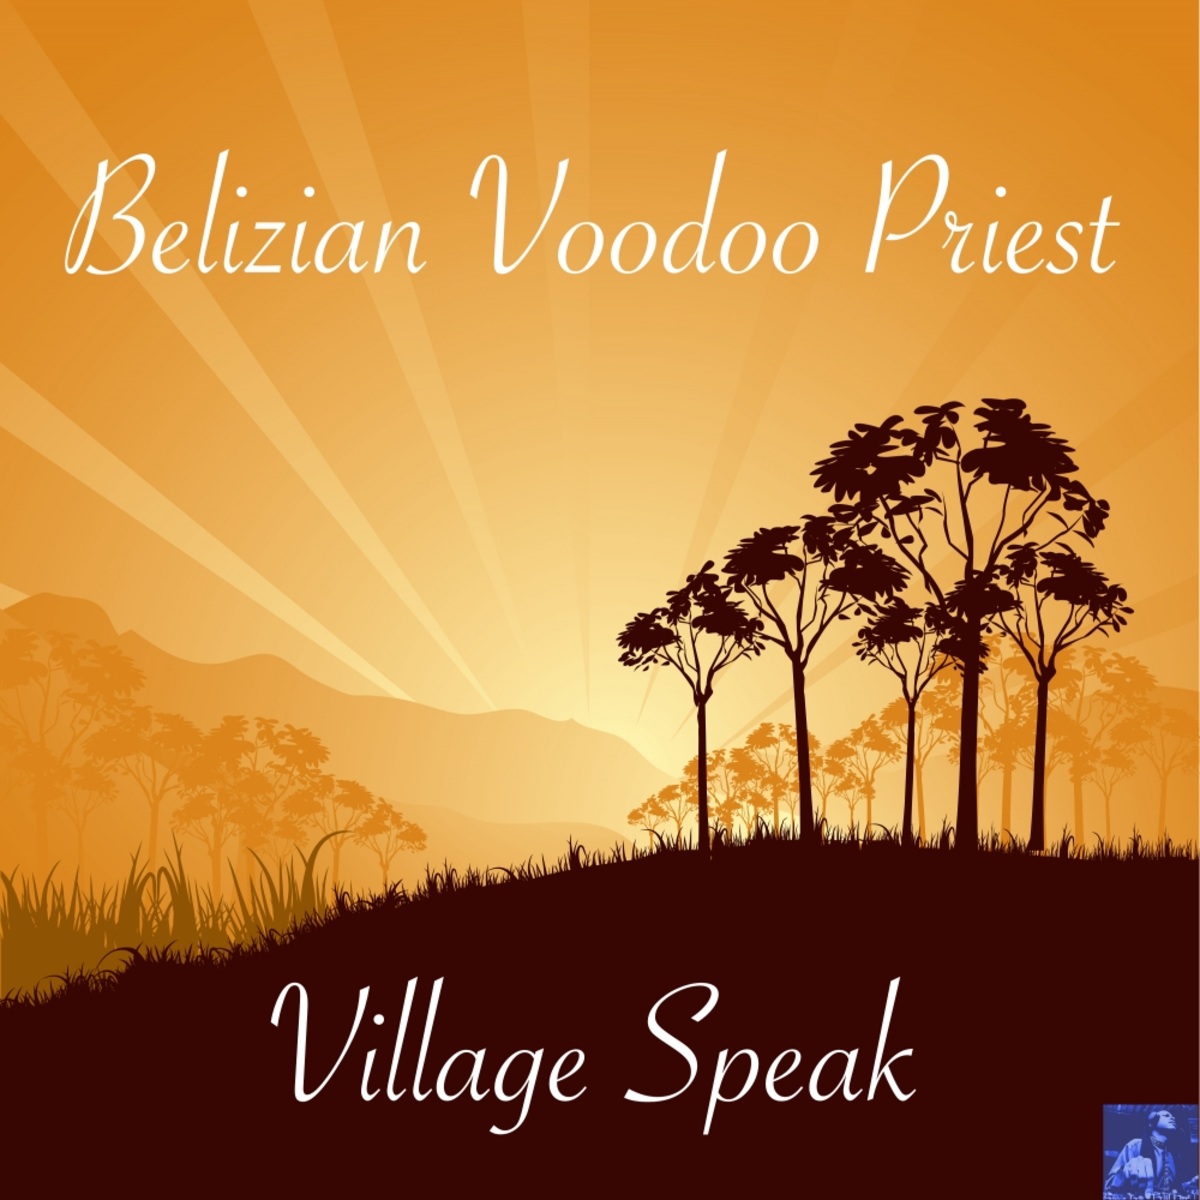 Belizian Voodoo Priest - Village Speak (Steve Miggedy Maestro, Morttimer Snerd III ReTouch) / Miggedy Entertainment